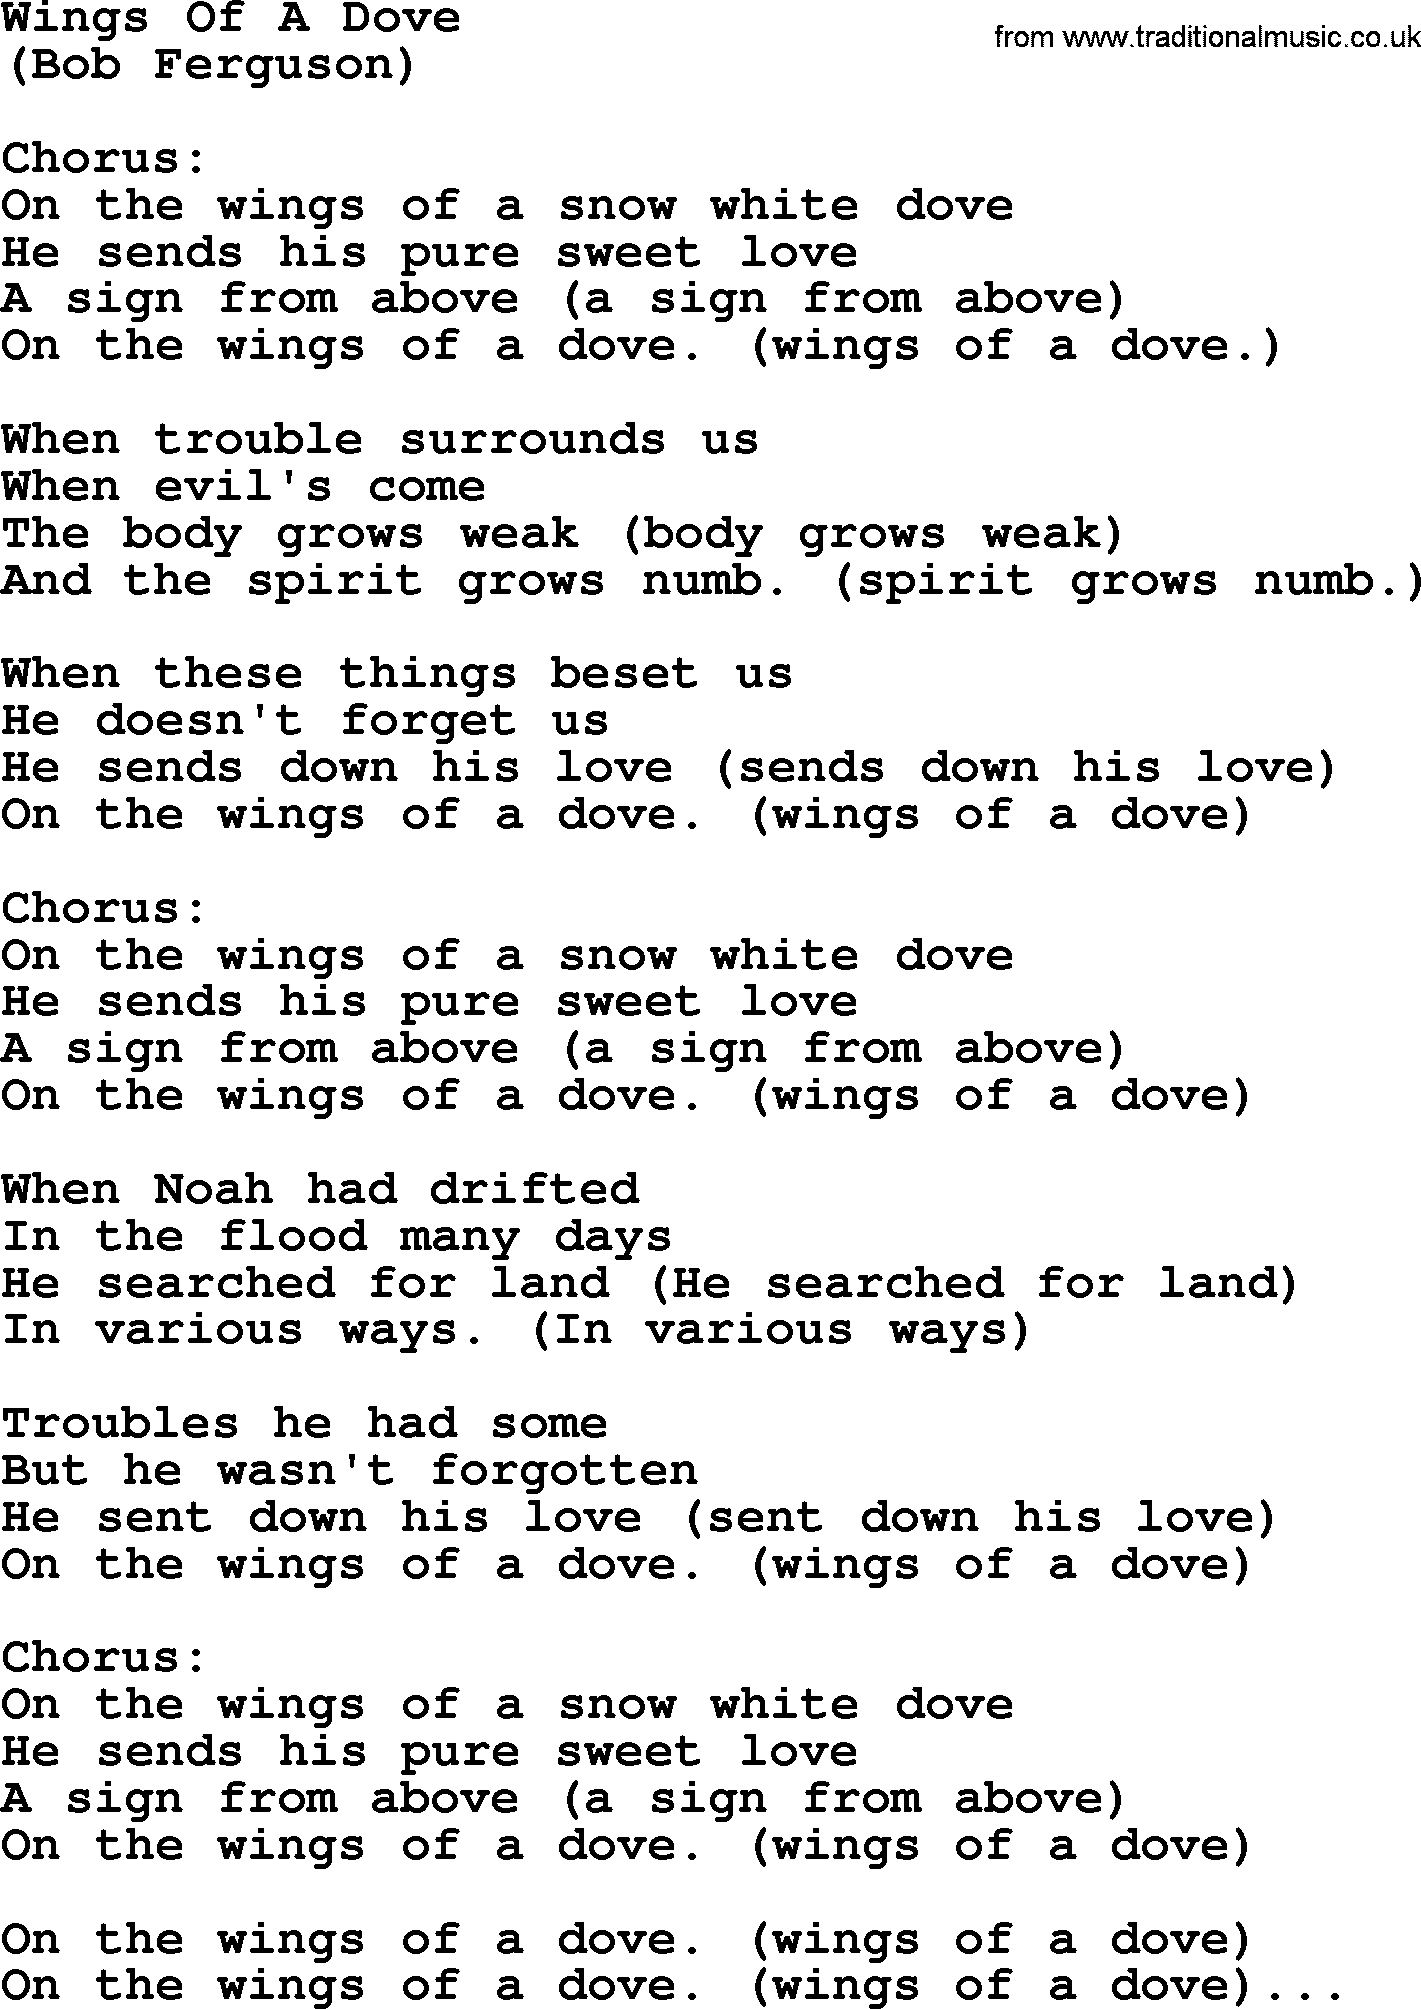 George Jones song: Wings Of A Dove, lyrics